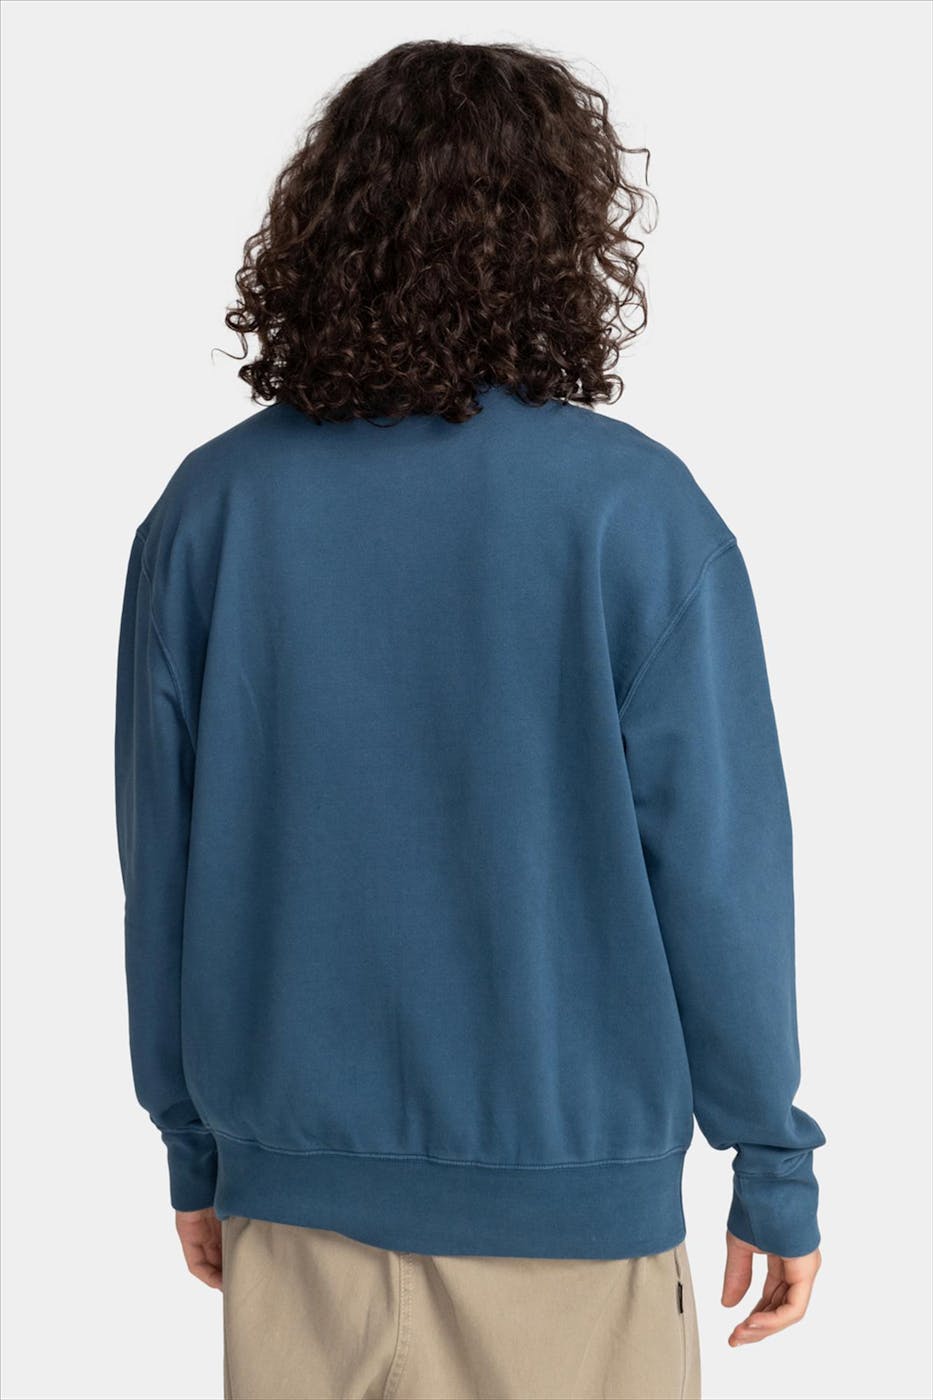 Element - Donkerblauwe Cornell Crew sweater